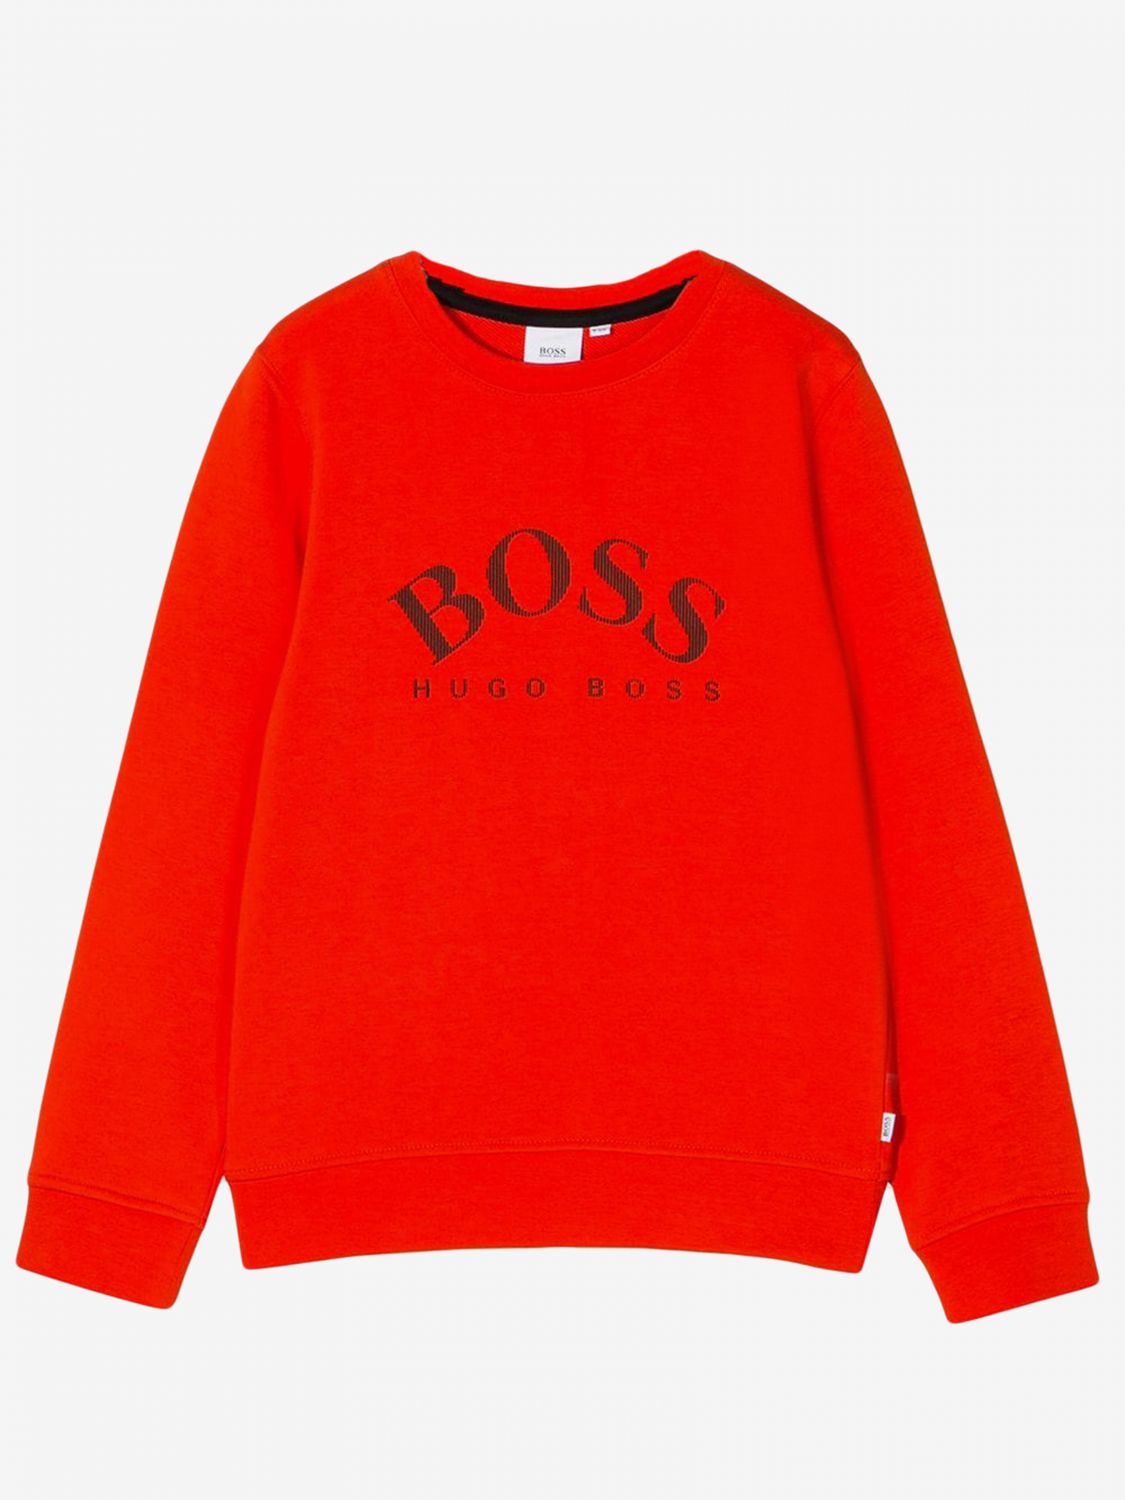 zvono Nepredviđene okolnosti tišina  Hugo Boss crewneck sweatshirt | Sweater Hugo Boss Kids Red | Sweater Hugo  Boss J25G05 Giglio EN